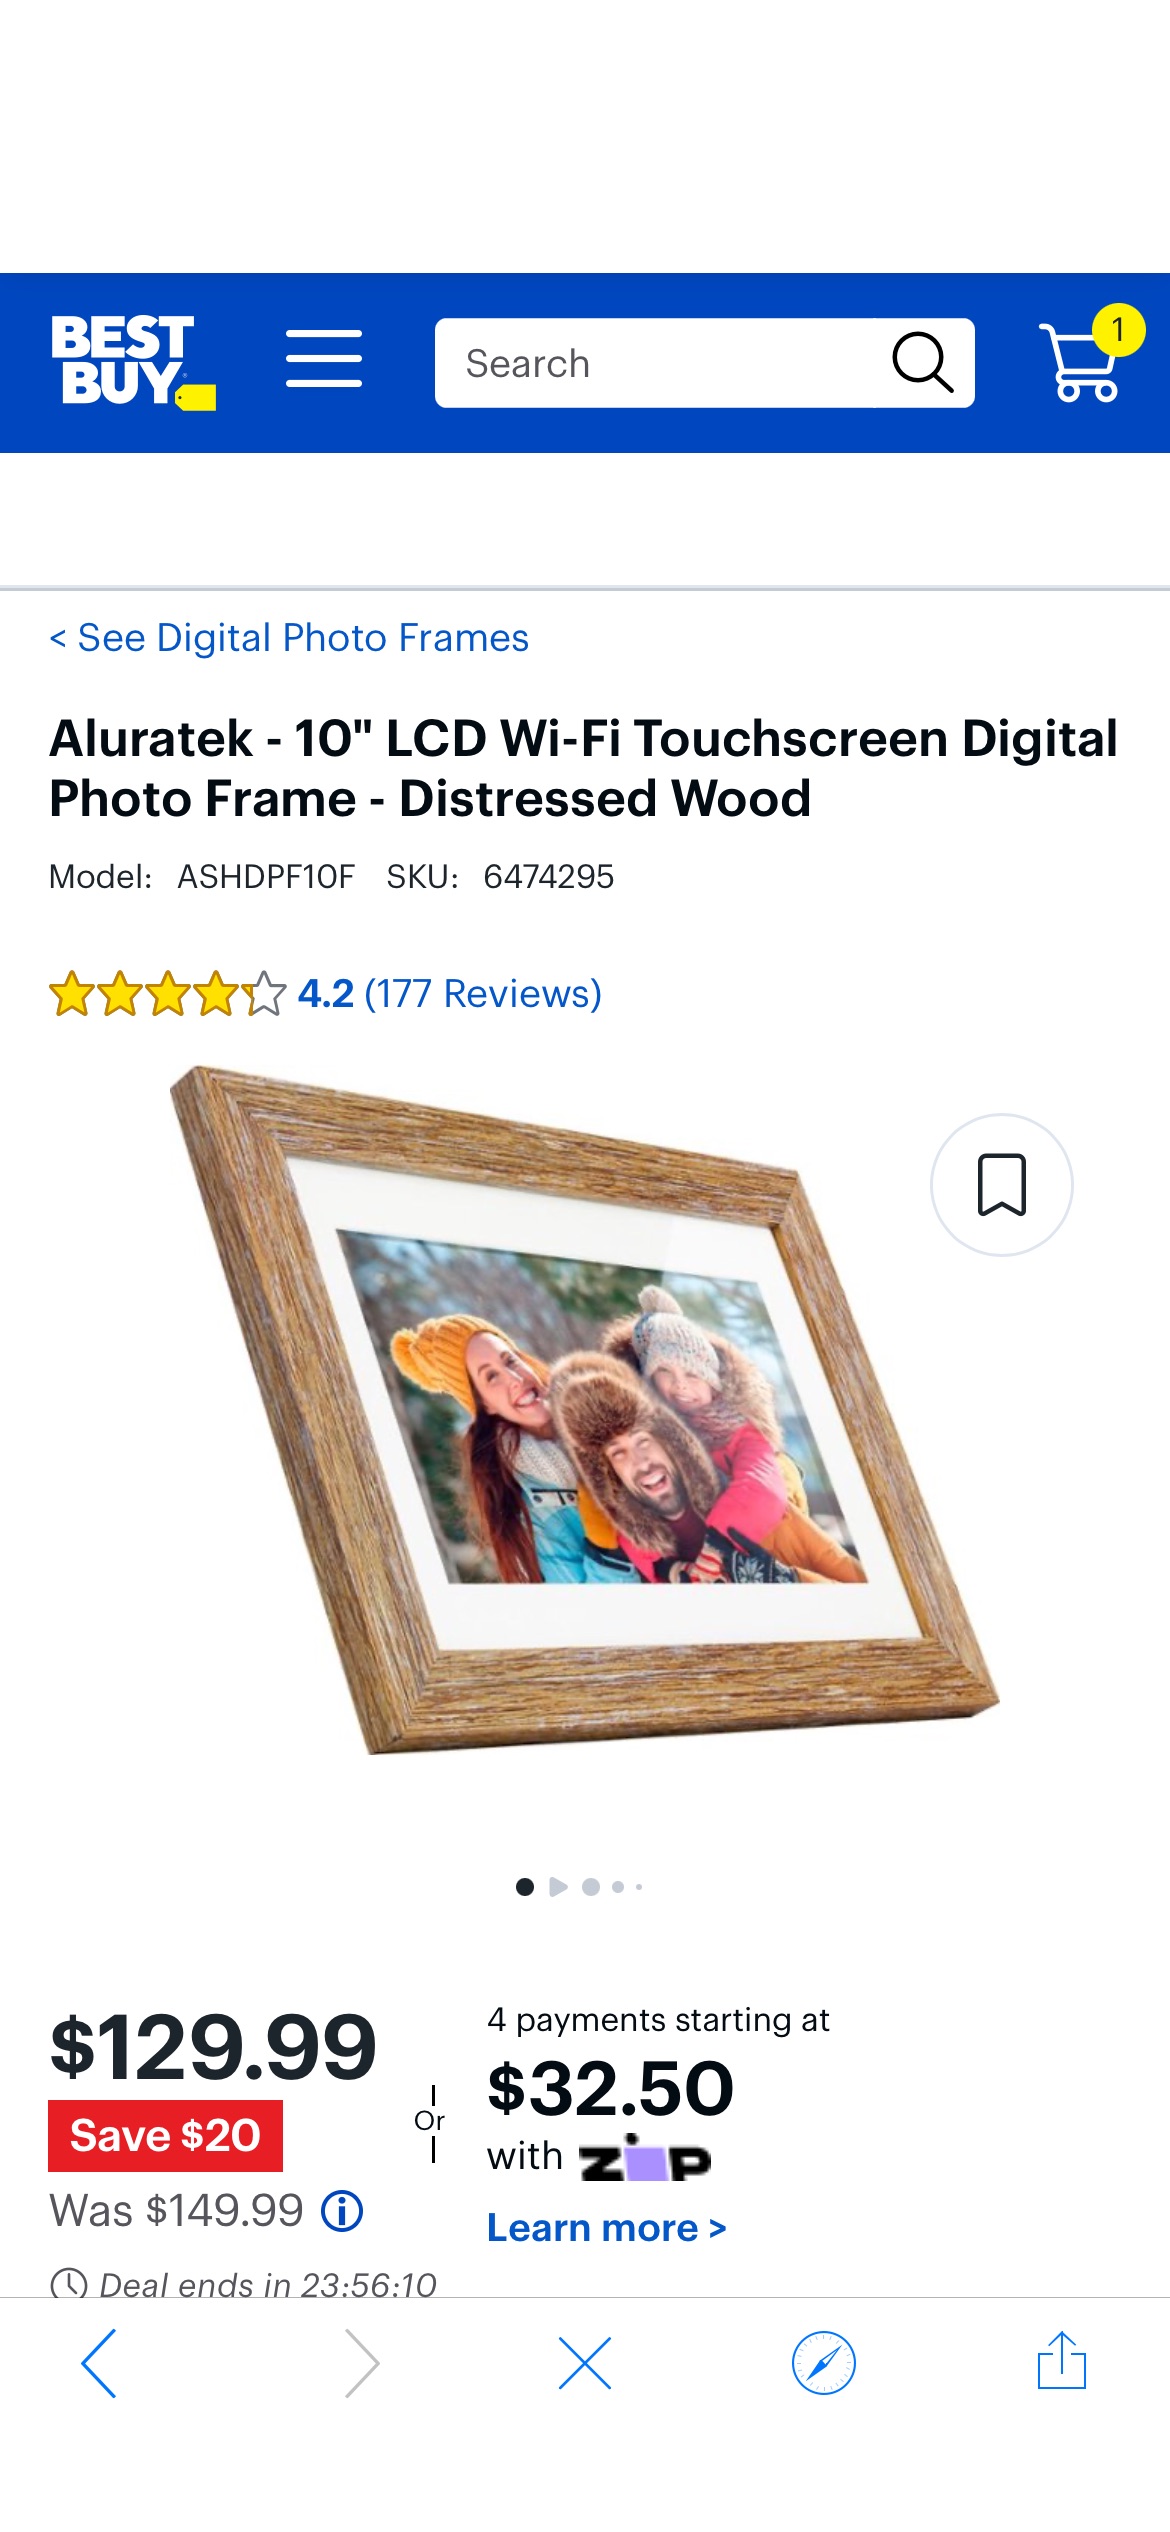 Aluratek 10" LCD Wi-Fi Touchscreen Digital Photo Frame Distressed Wood ASHDPF10F - Best Buy